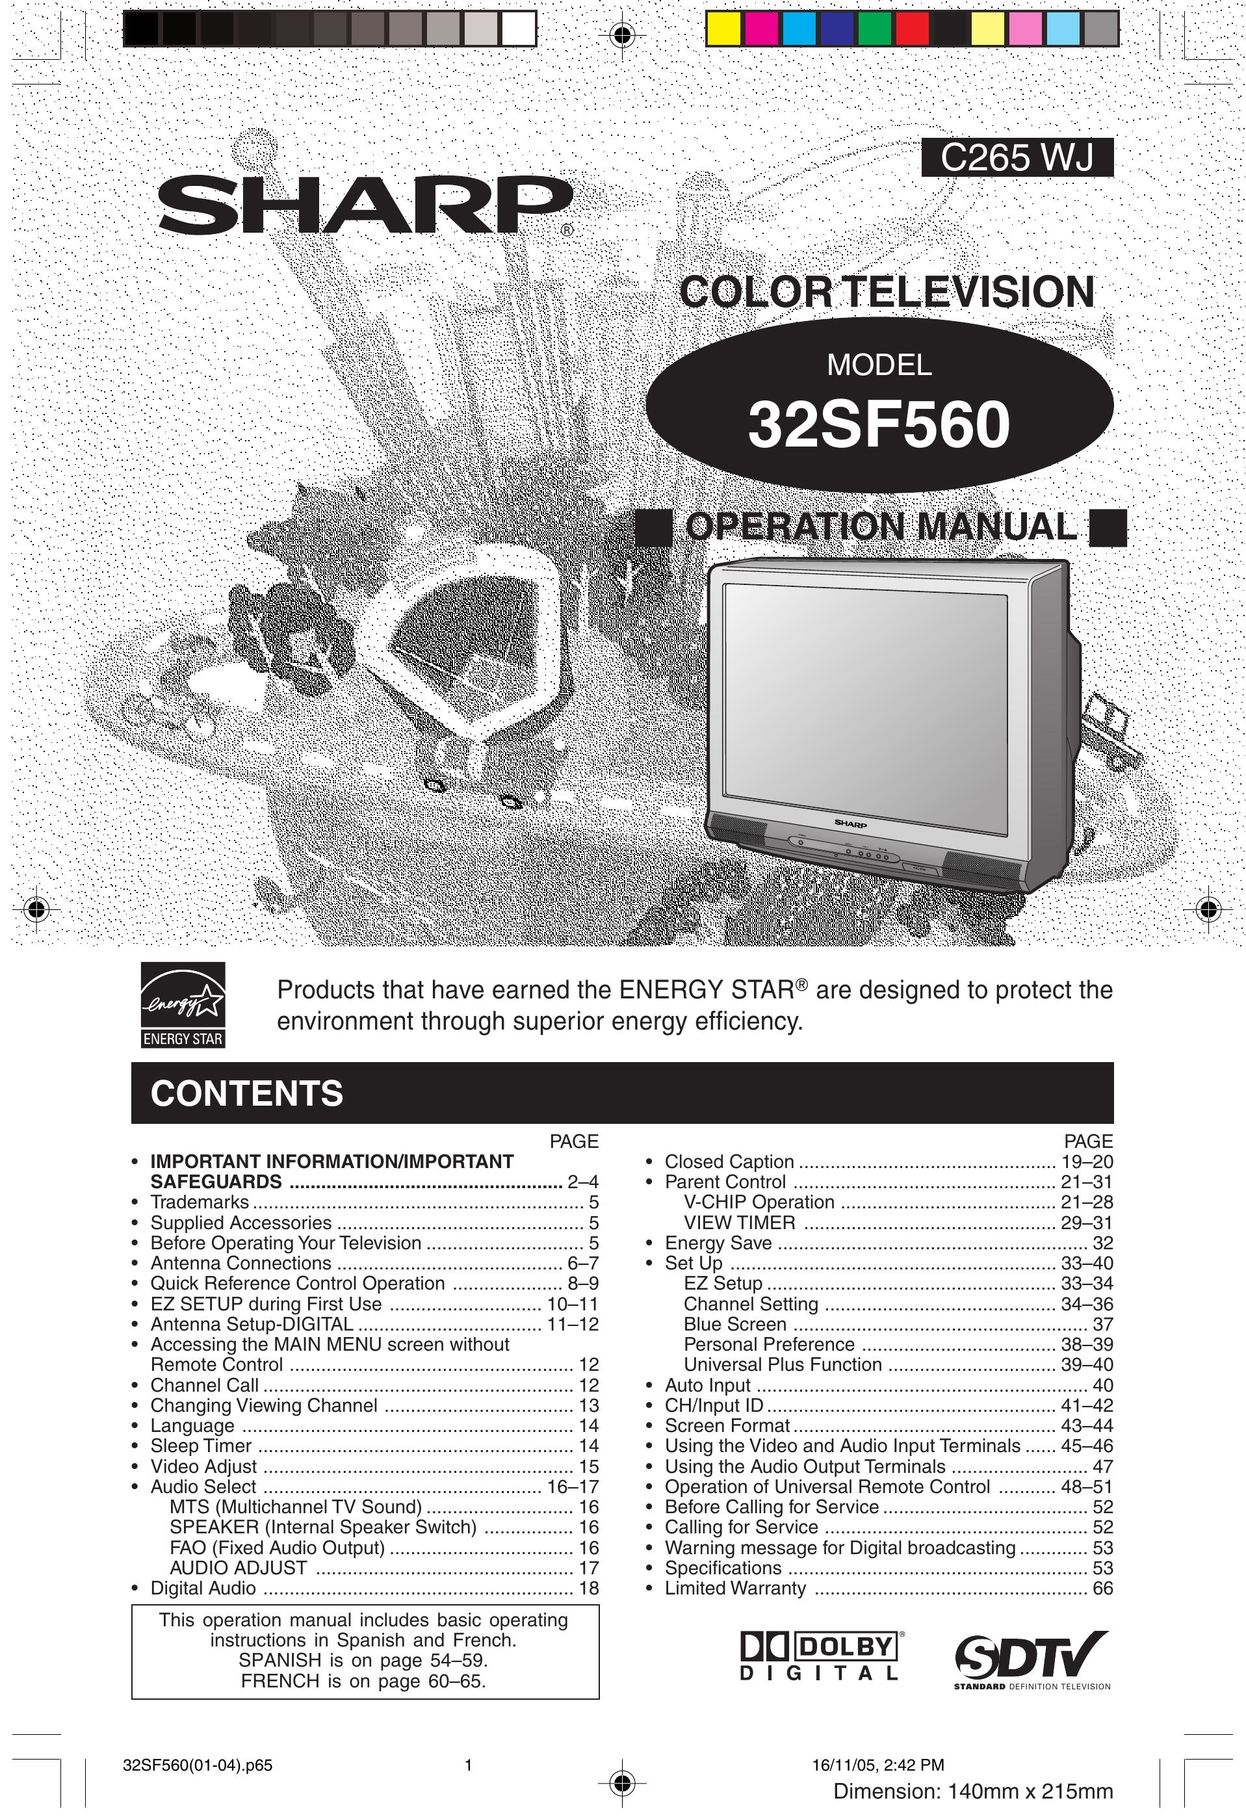 Sharp 32SF560 CRT Television User Manual